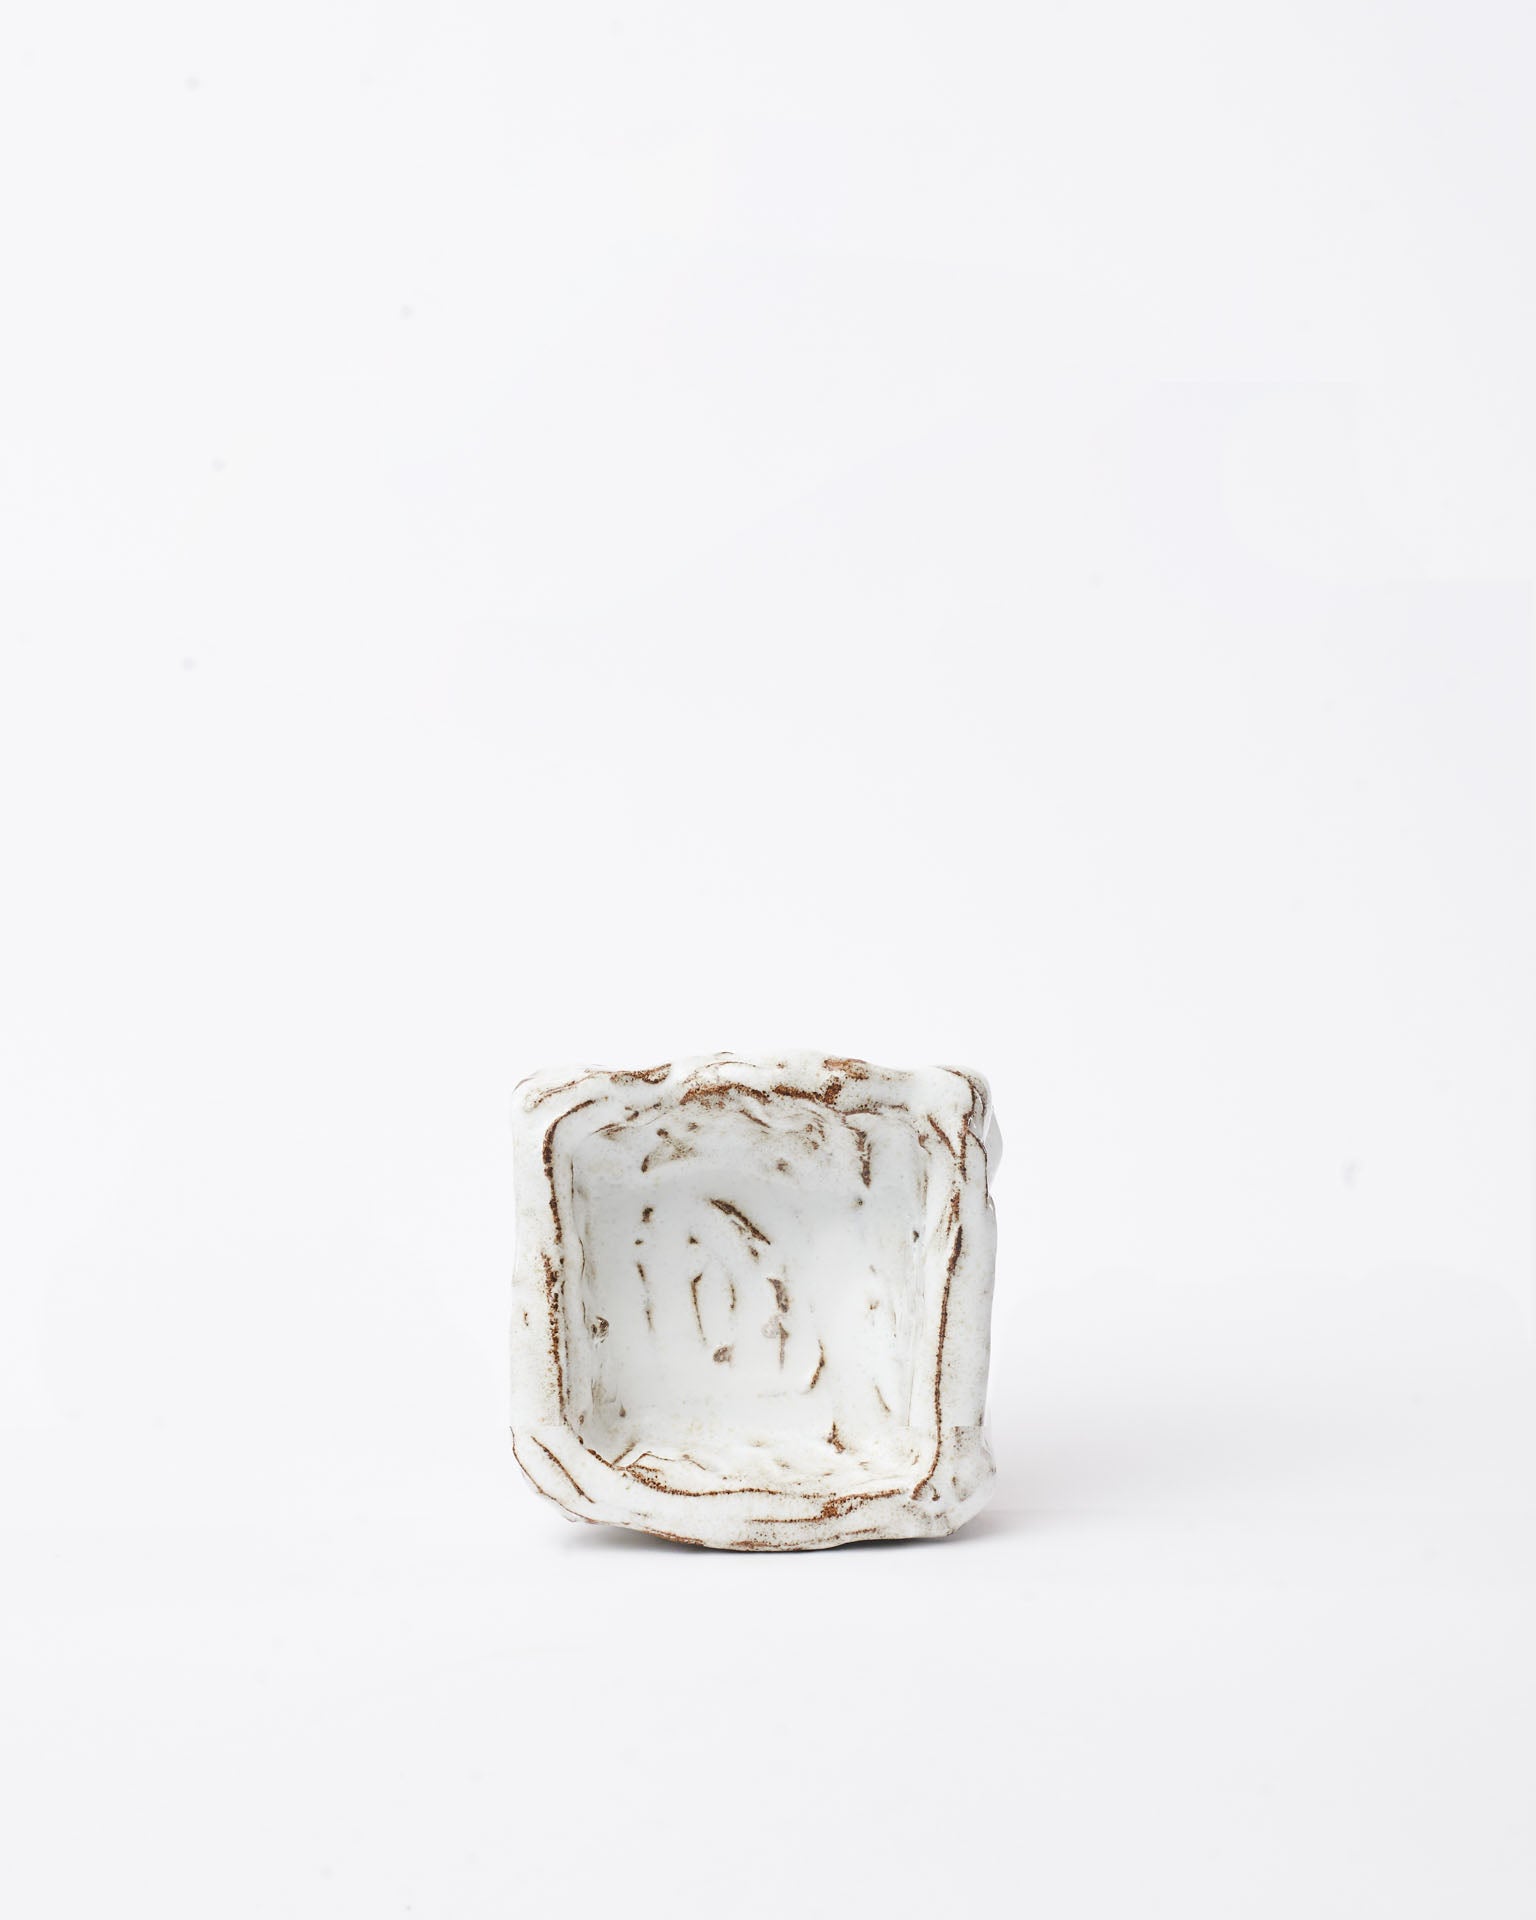 Handmade ceramic organizer object white upright in white background